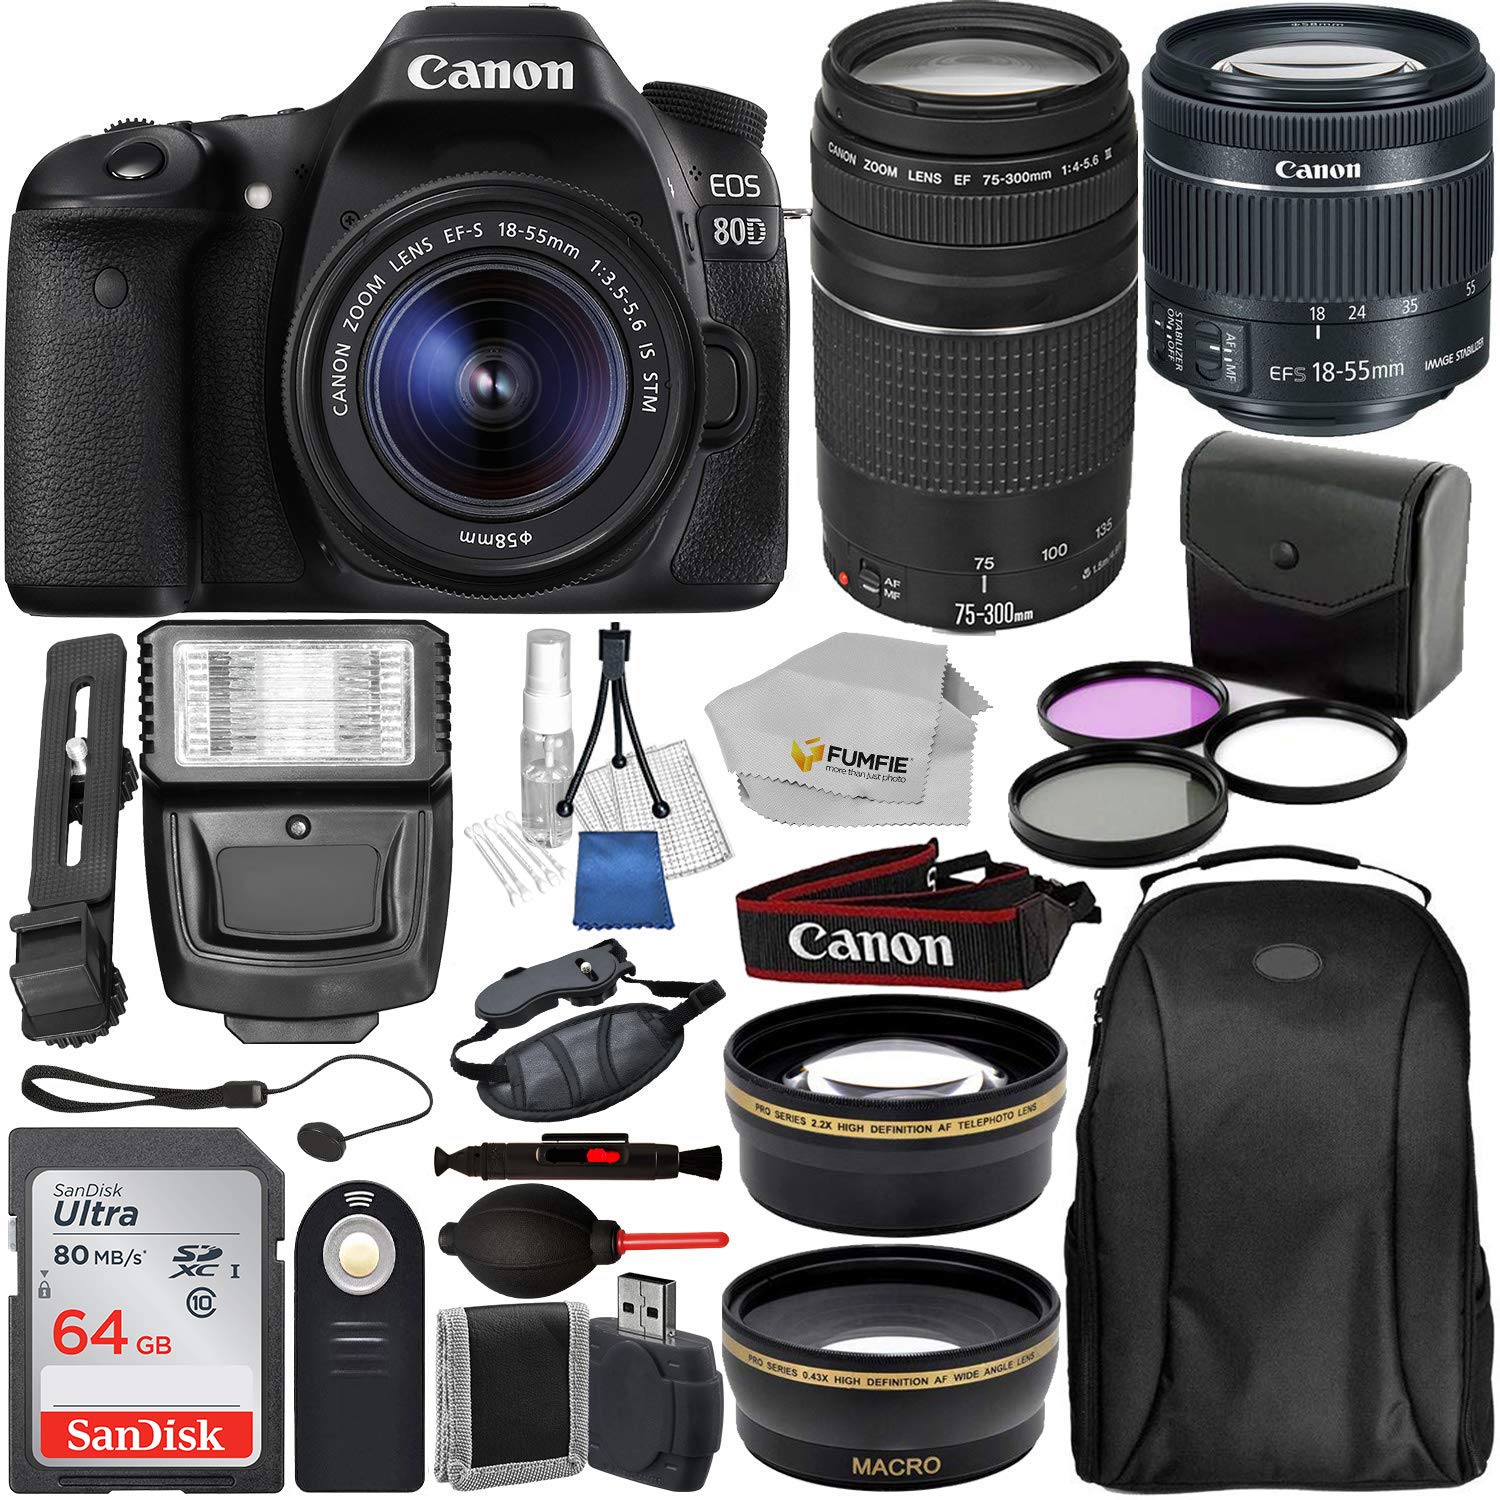 Canon EOS 80D Digital SLR Camera with EF-S 18-55mm IS STM and EF 75-300mm Lens (Black) 19PC Professional Bundle